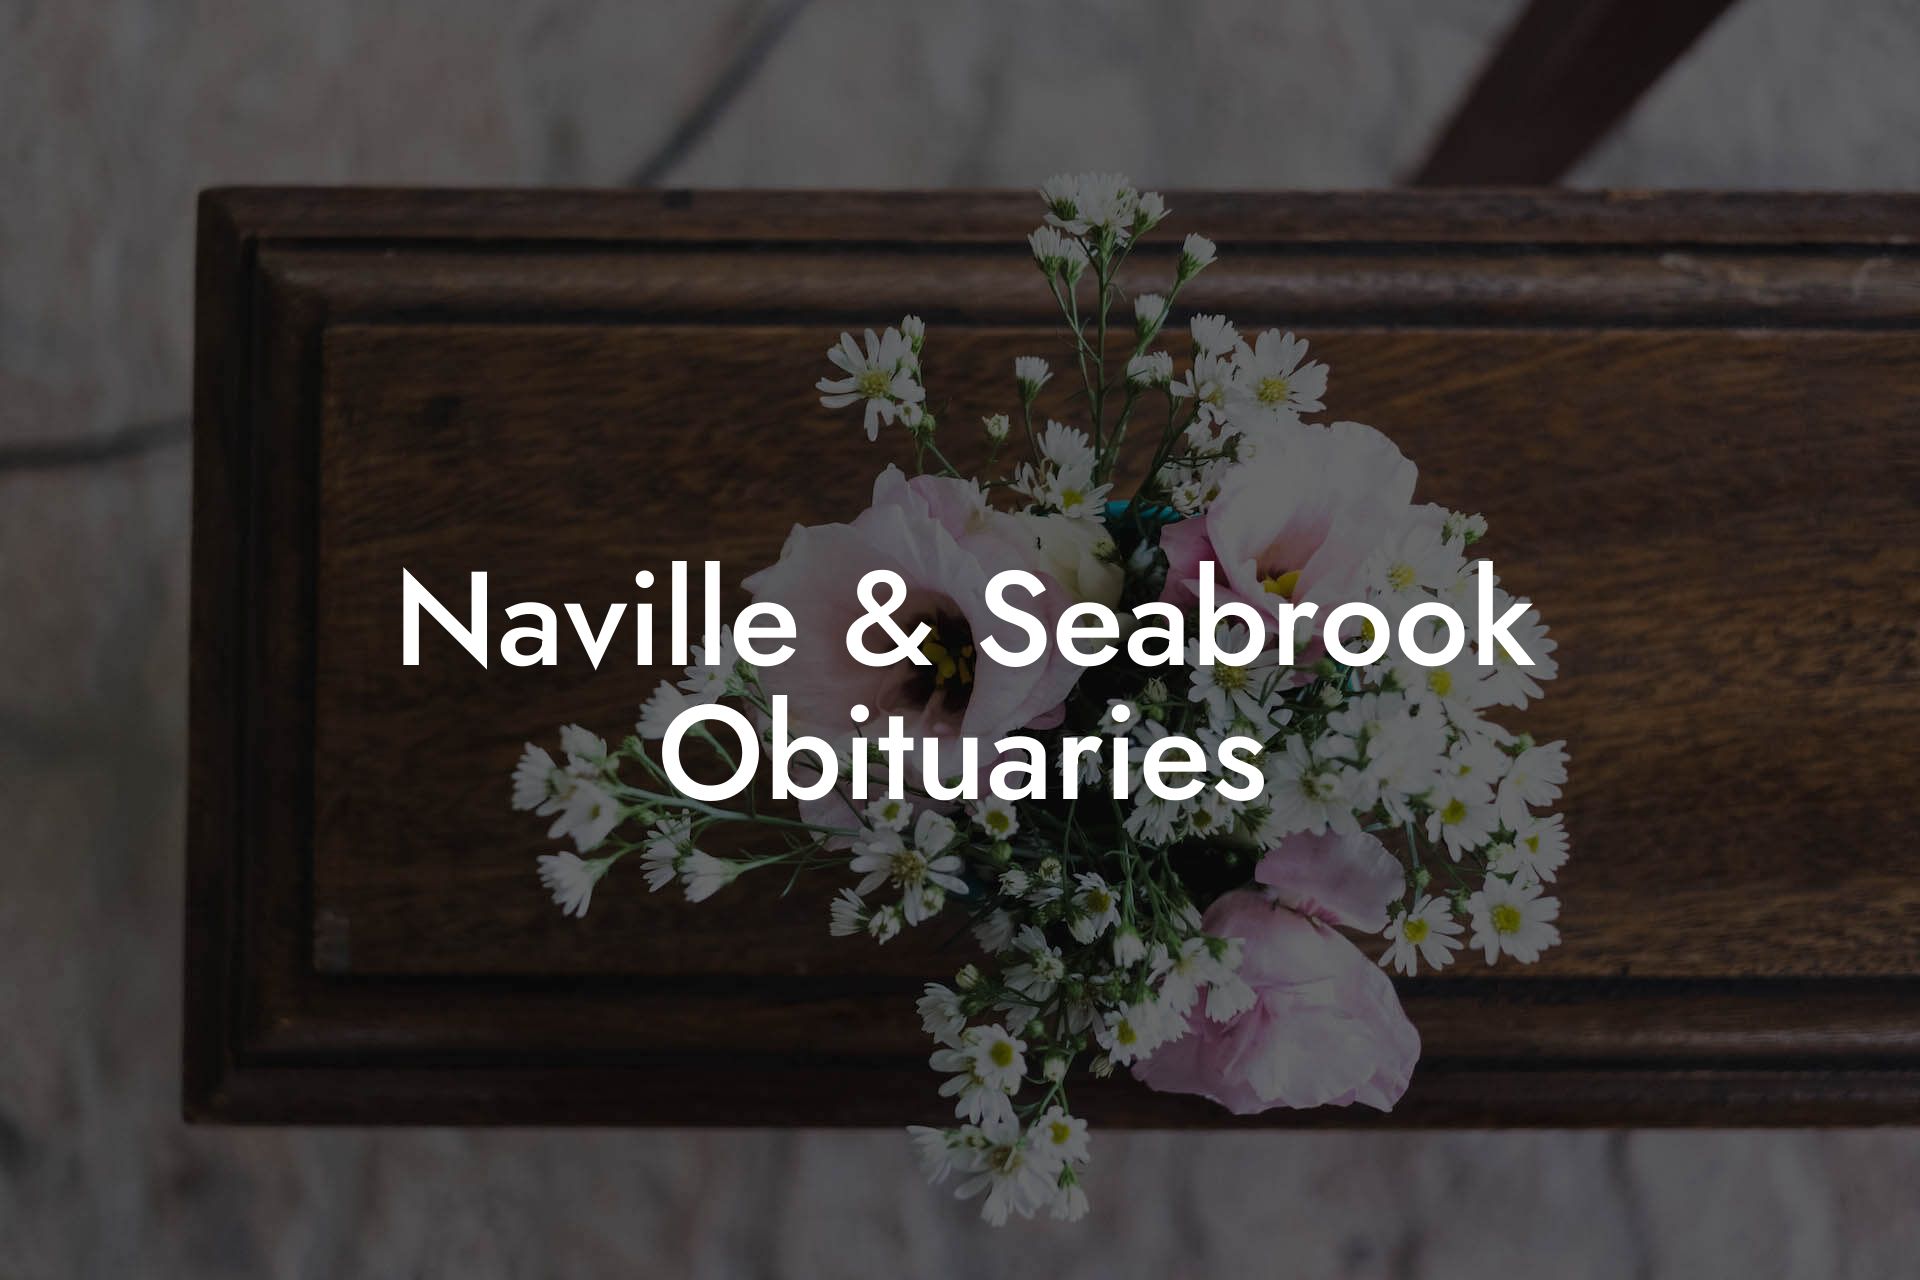 Naville & Seabrook Obituaries